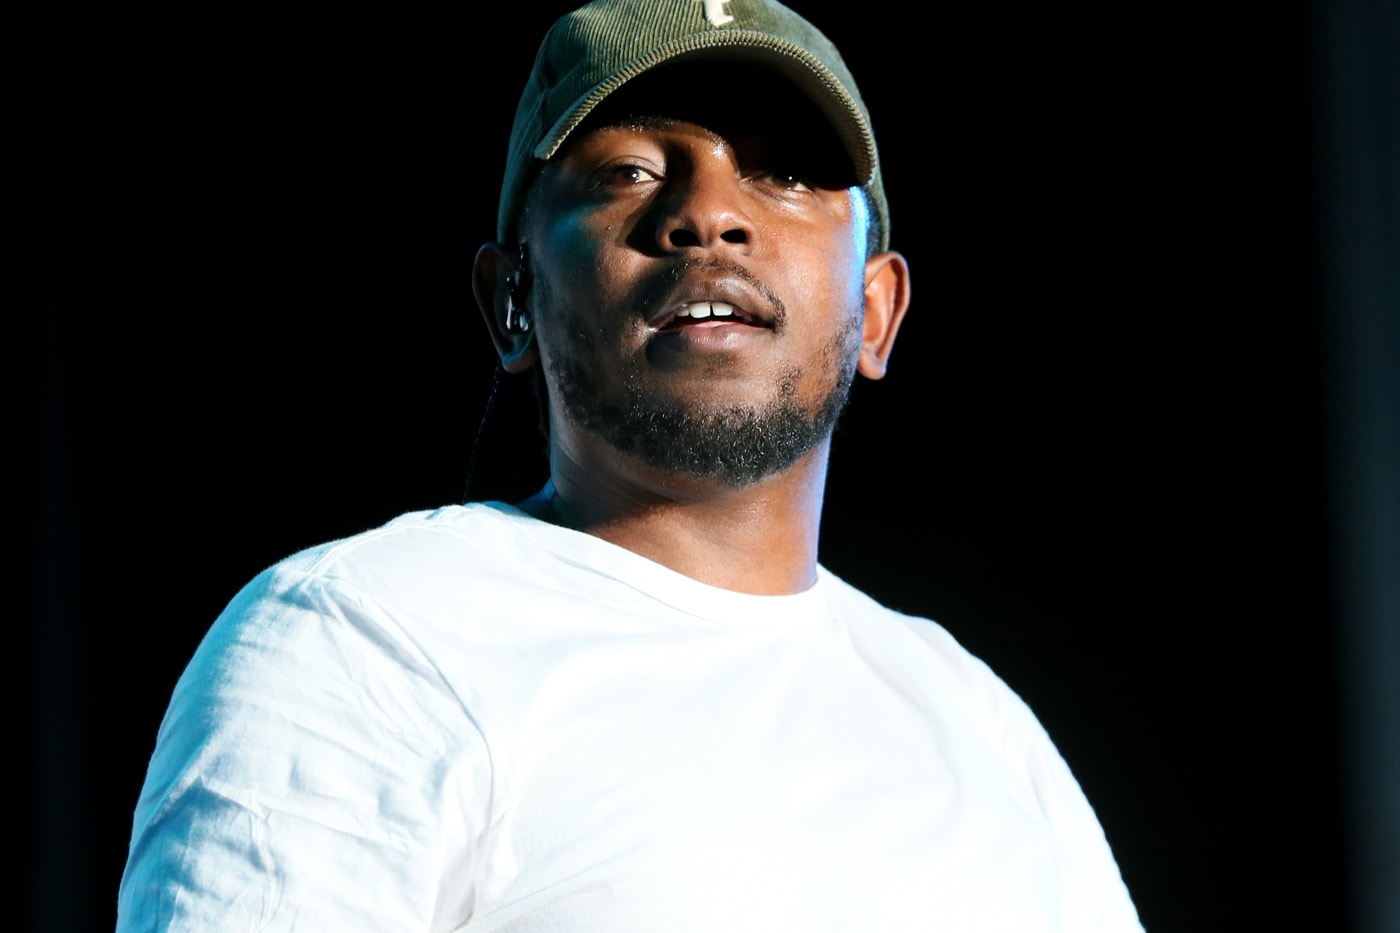 Kendrick Lamar DAMN Billboard No 1 Beat Drake More Life Largest Debut 2017